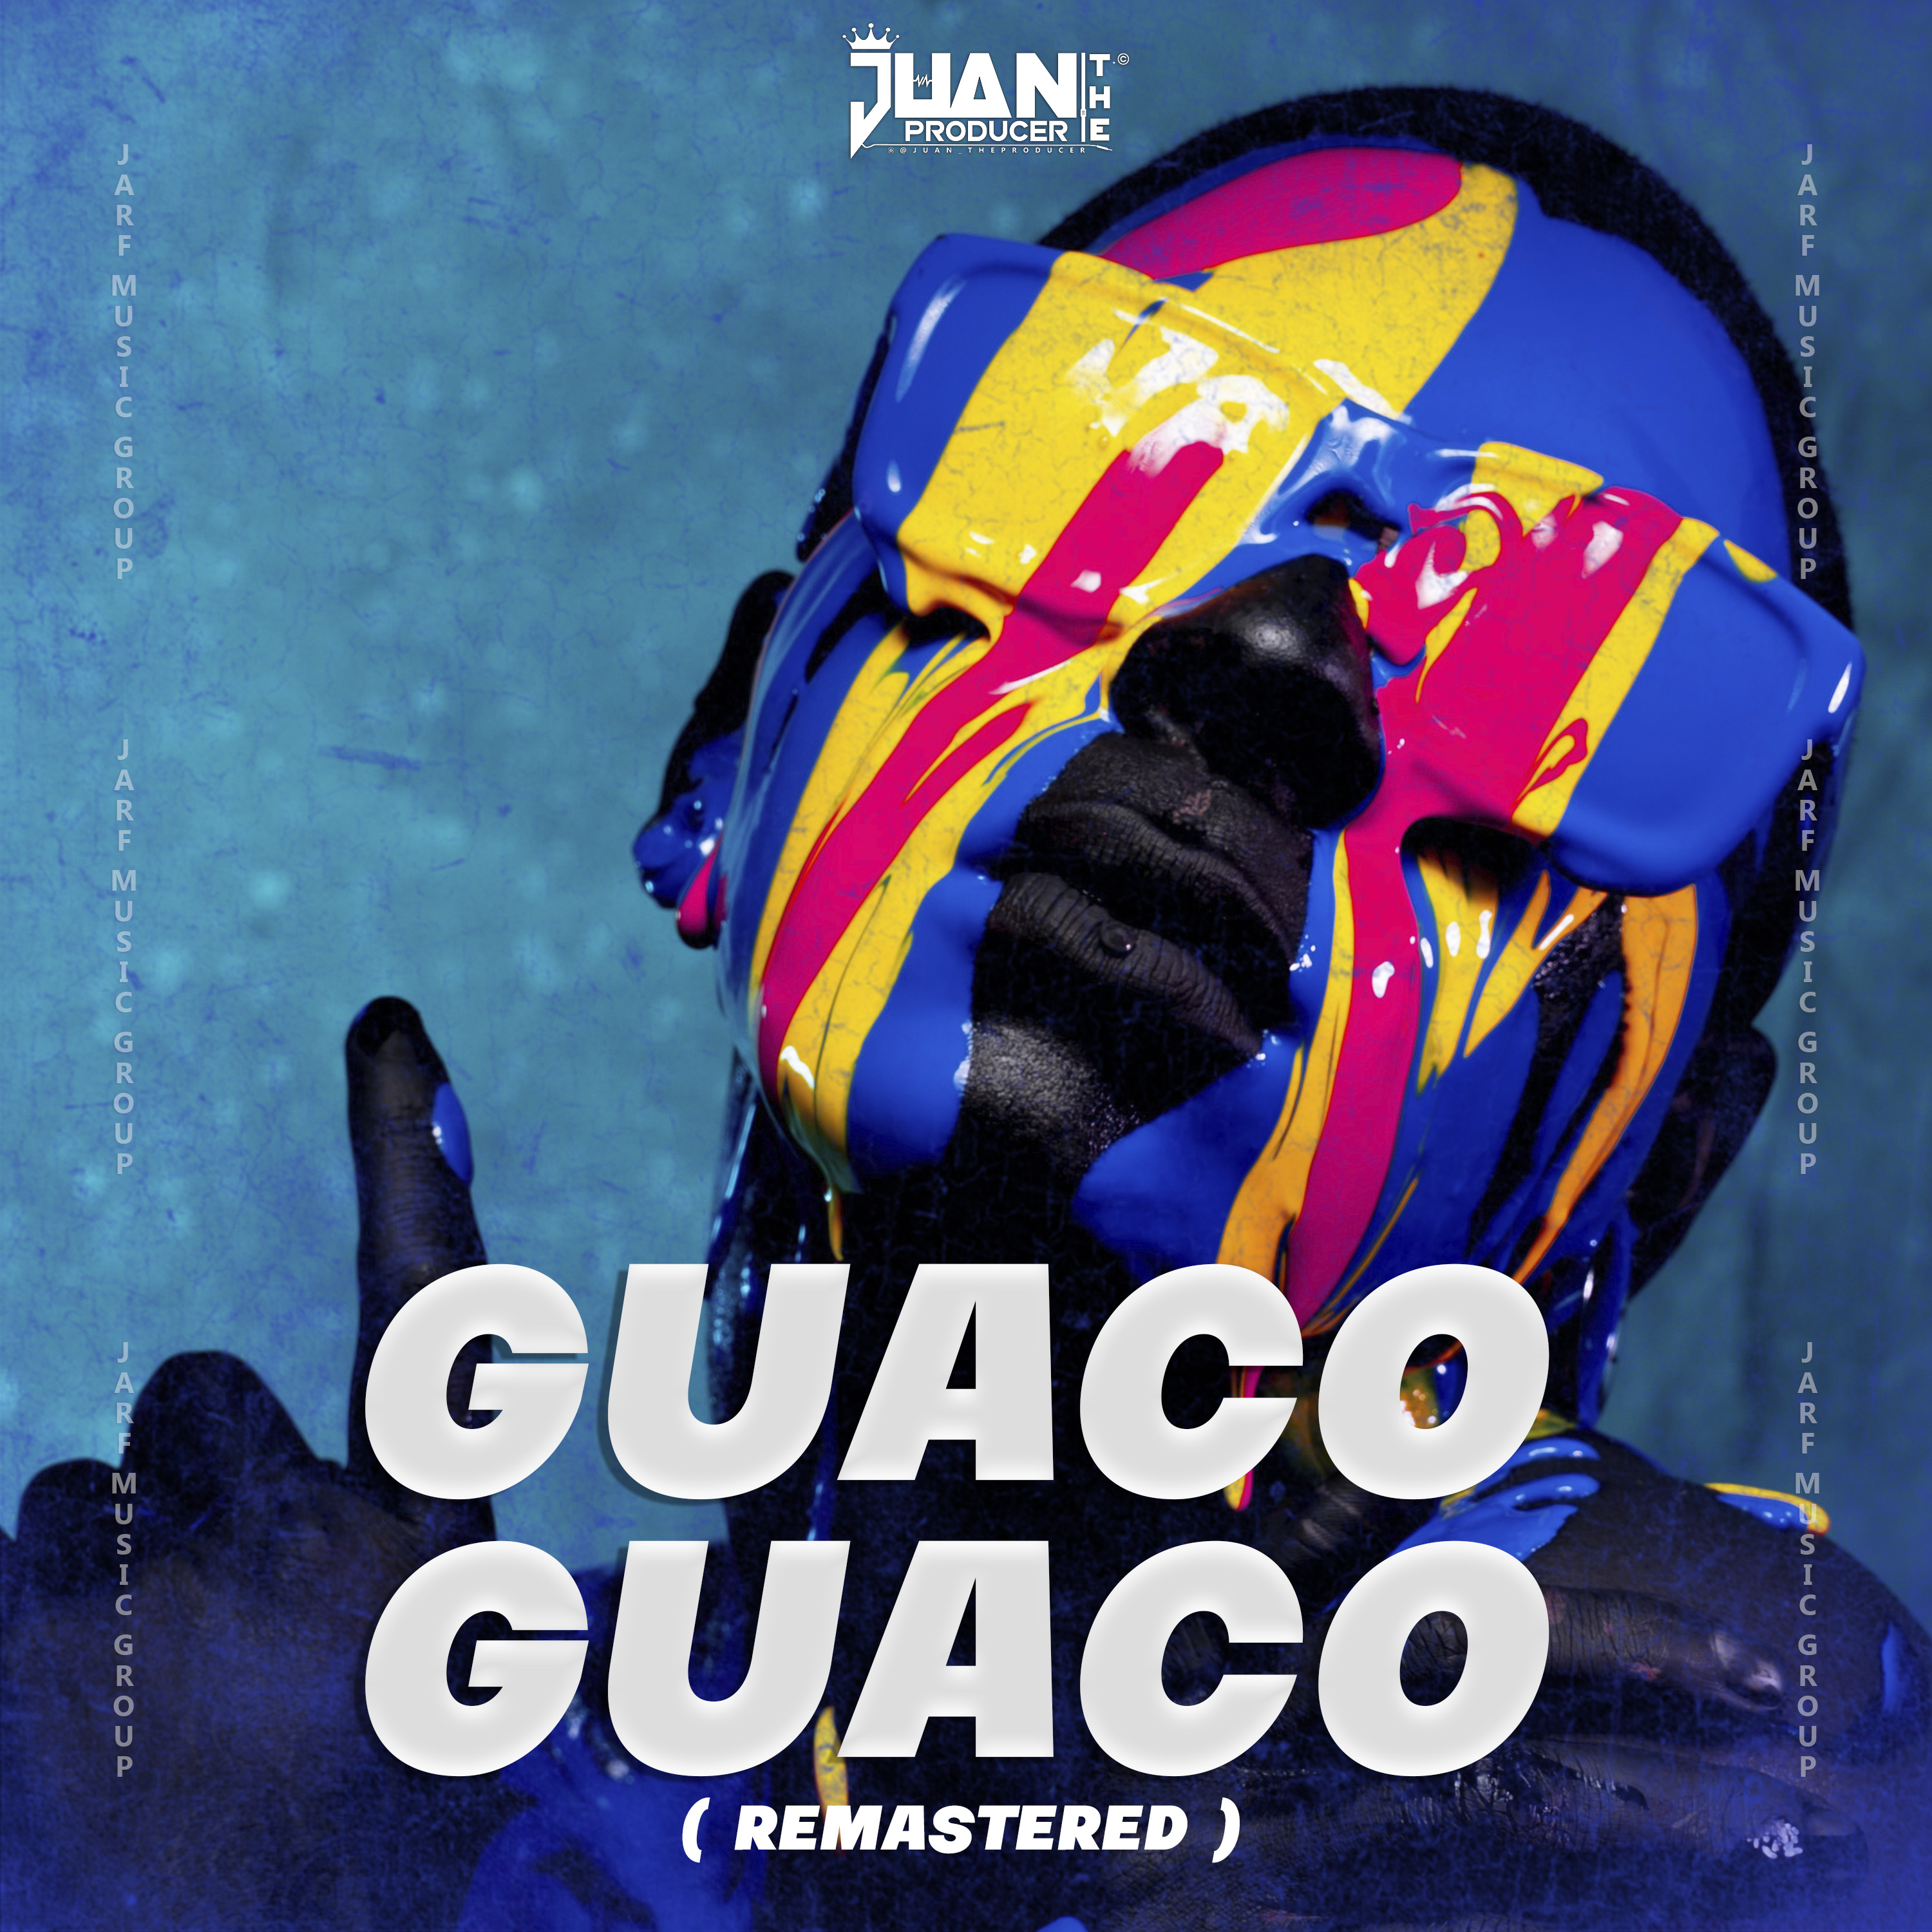 Juan_TheProducer - GUACO GUACO (Remastered)